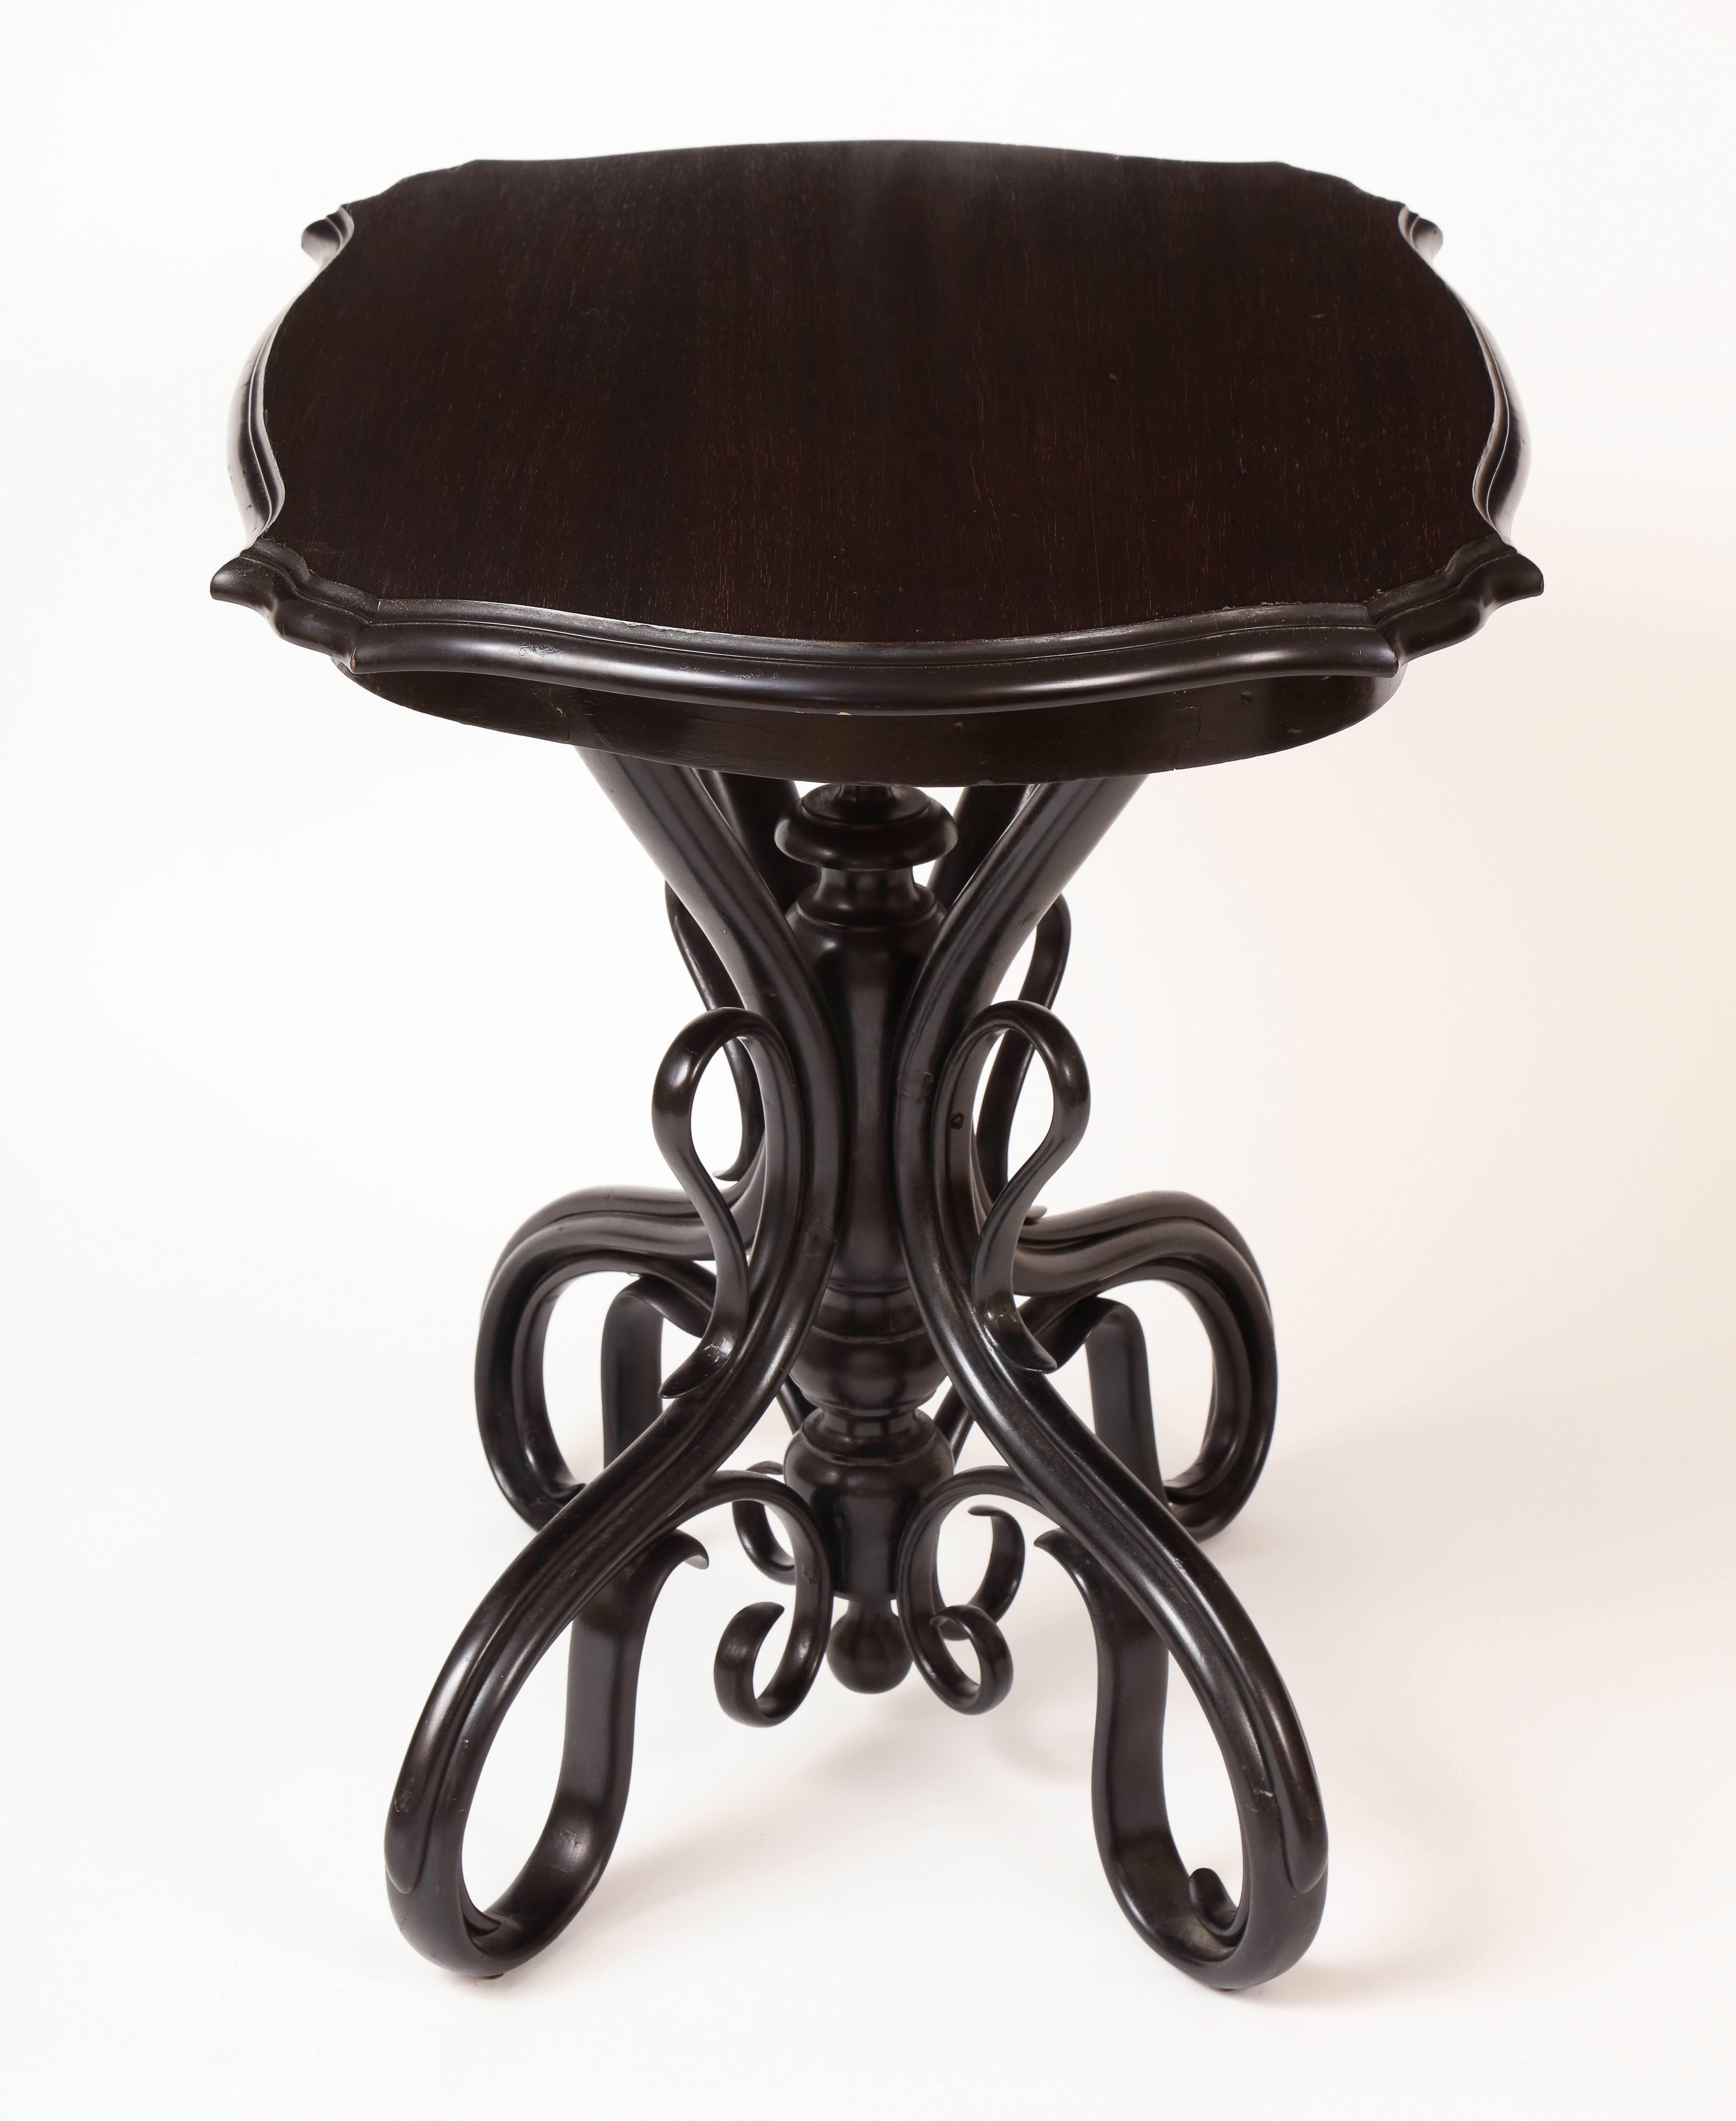 Art Nouveau Austrian Ebonized Bentwood Table by Gebruder Thonet, circa 1880